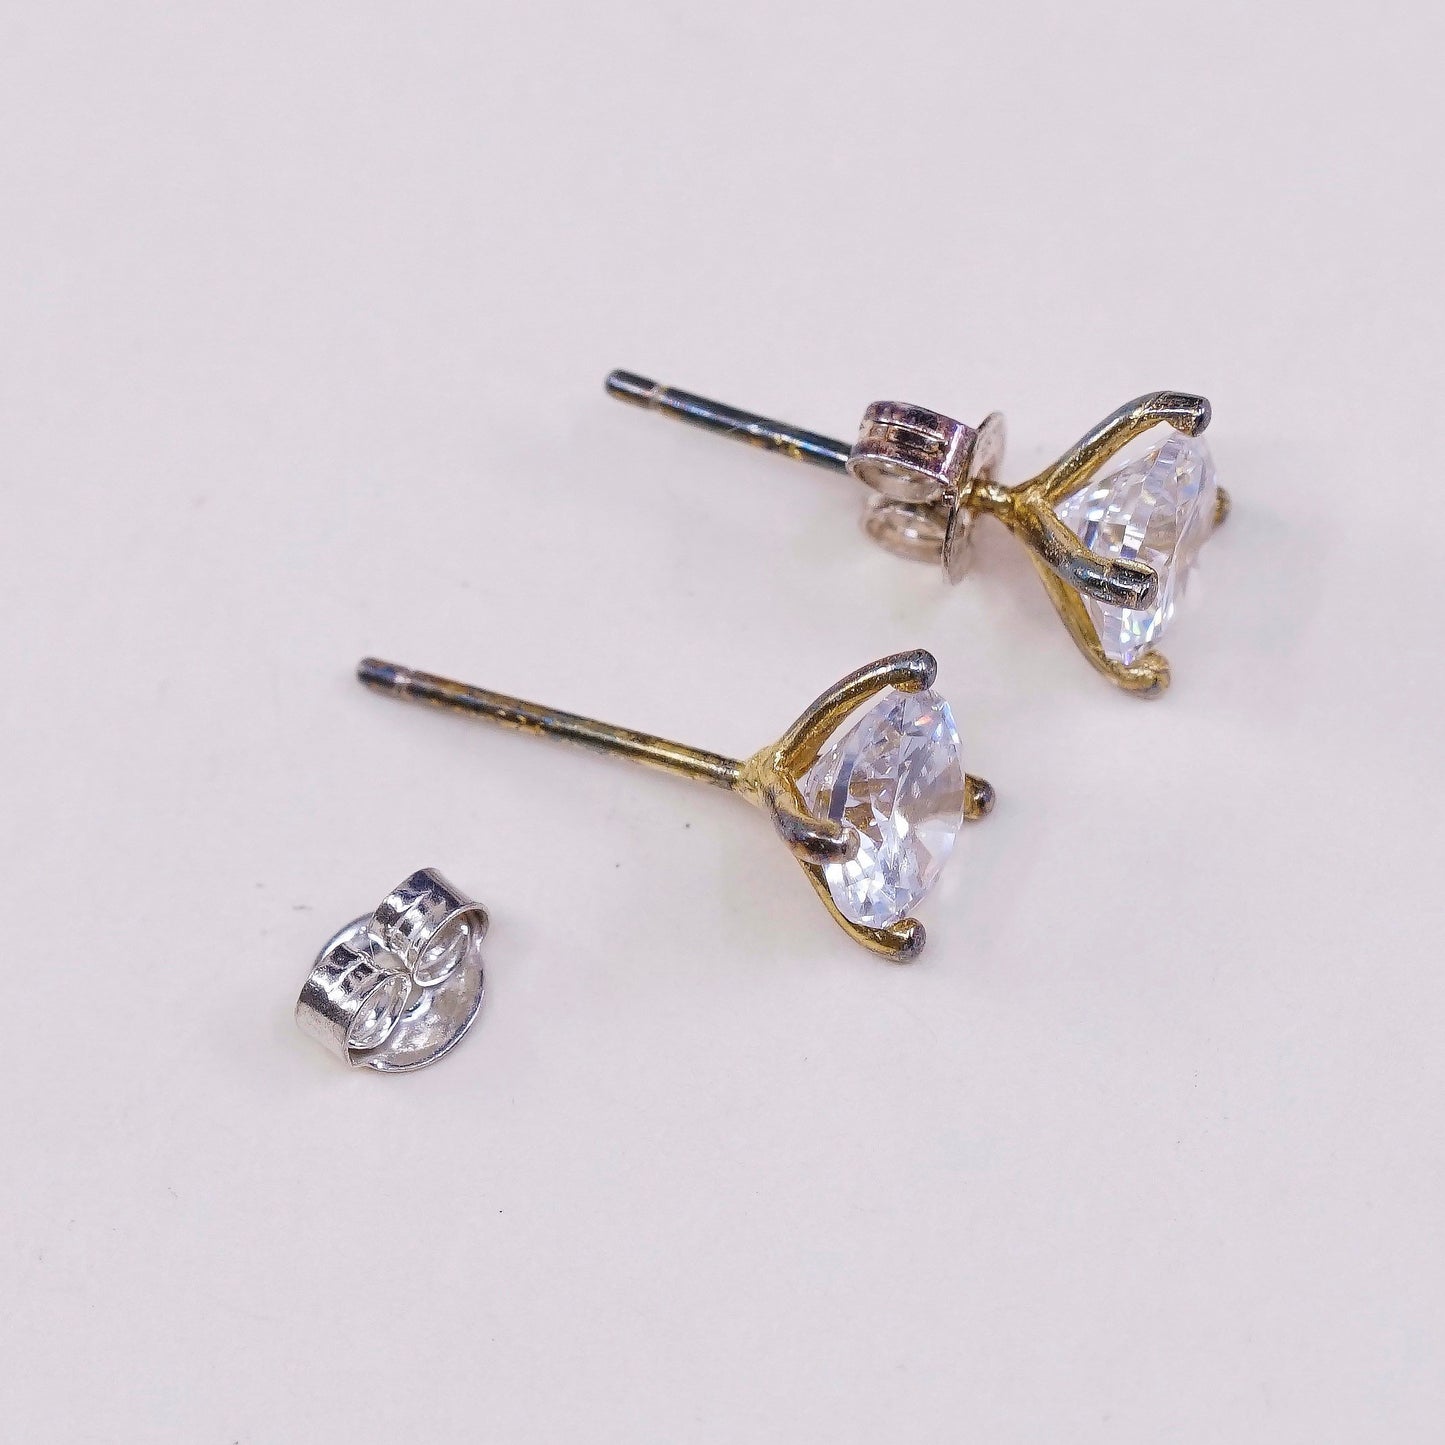 5mm, vtg sterling silver genuine cz studs, fashion minimalist earrings